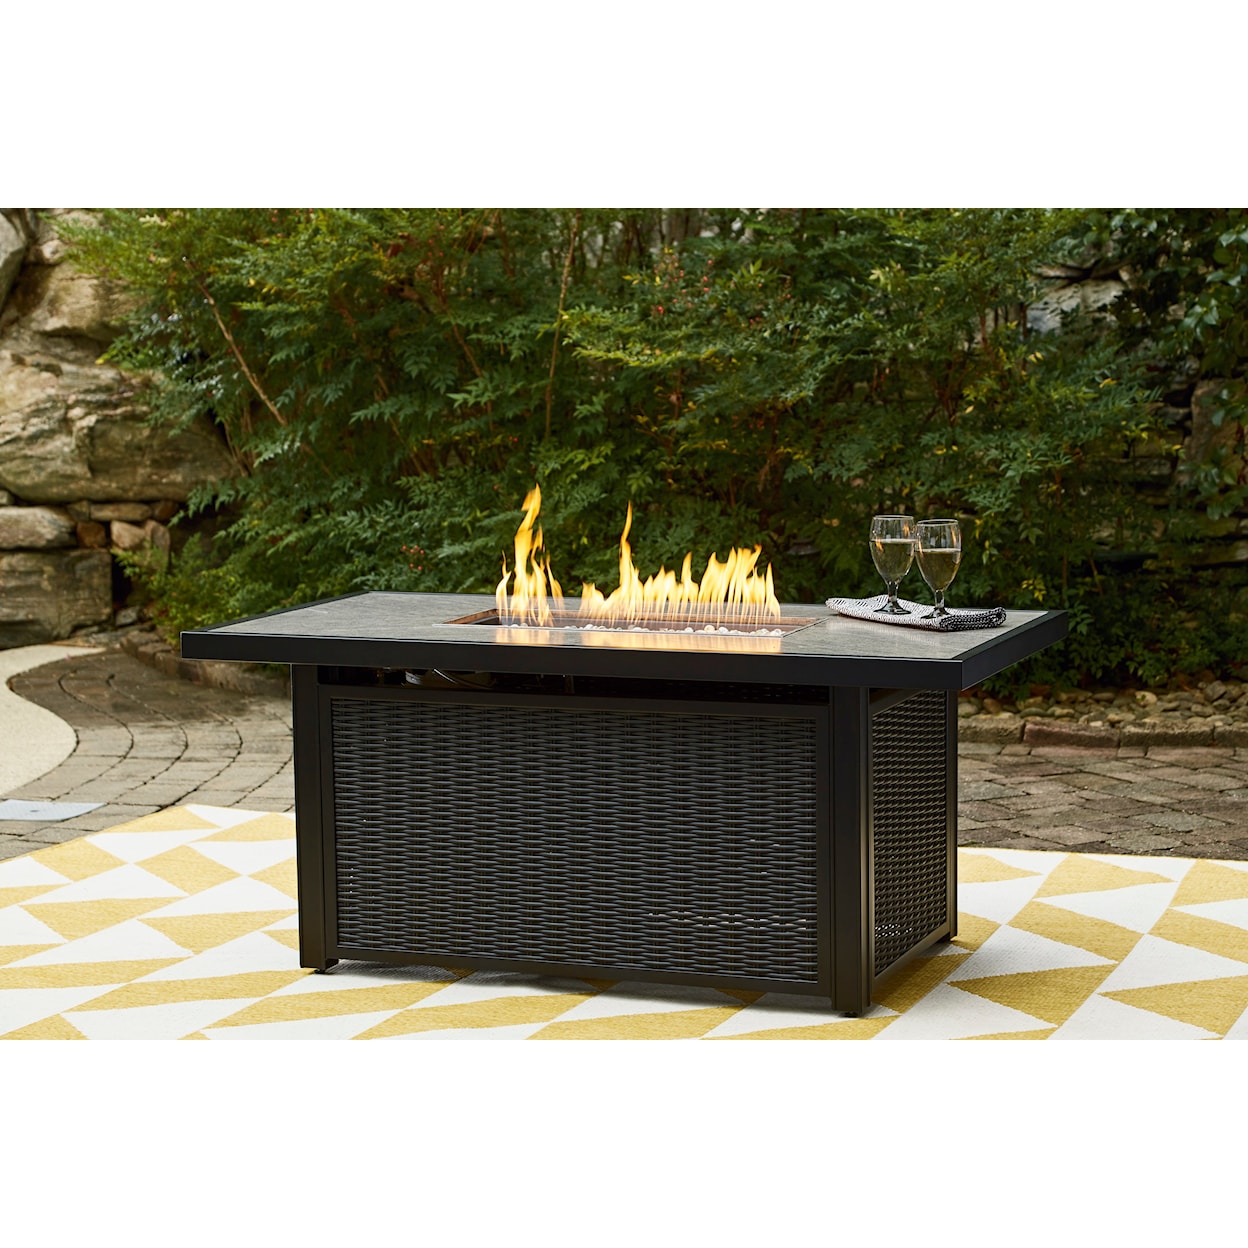 Ashley Furniture Signature Design Beachcroft Rectangular Fire Pit Table